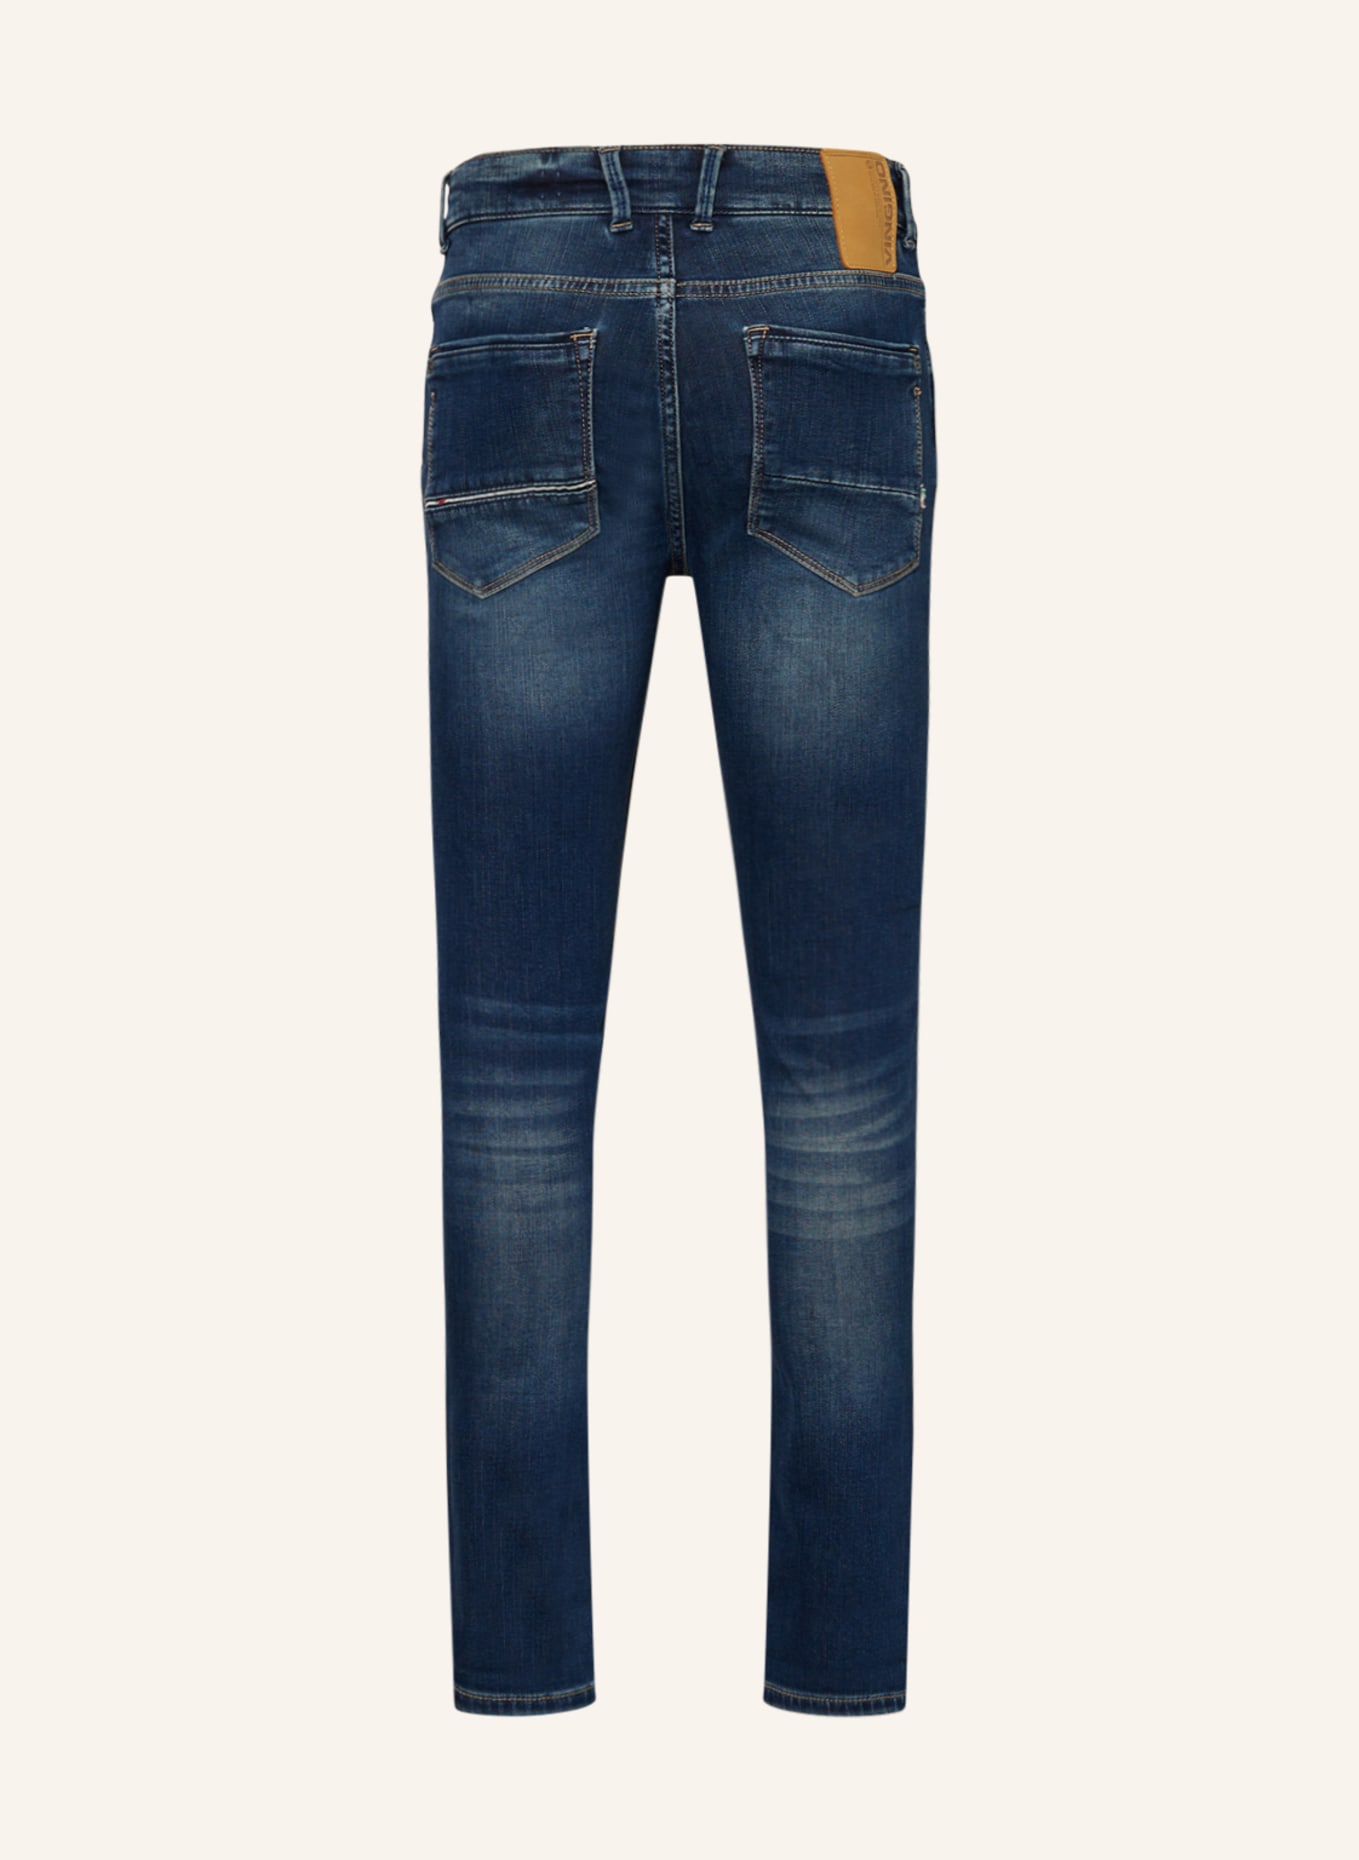 VINGINO Jeans AMOS Skinny Fit in deep dark